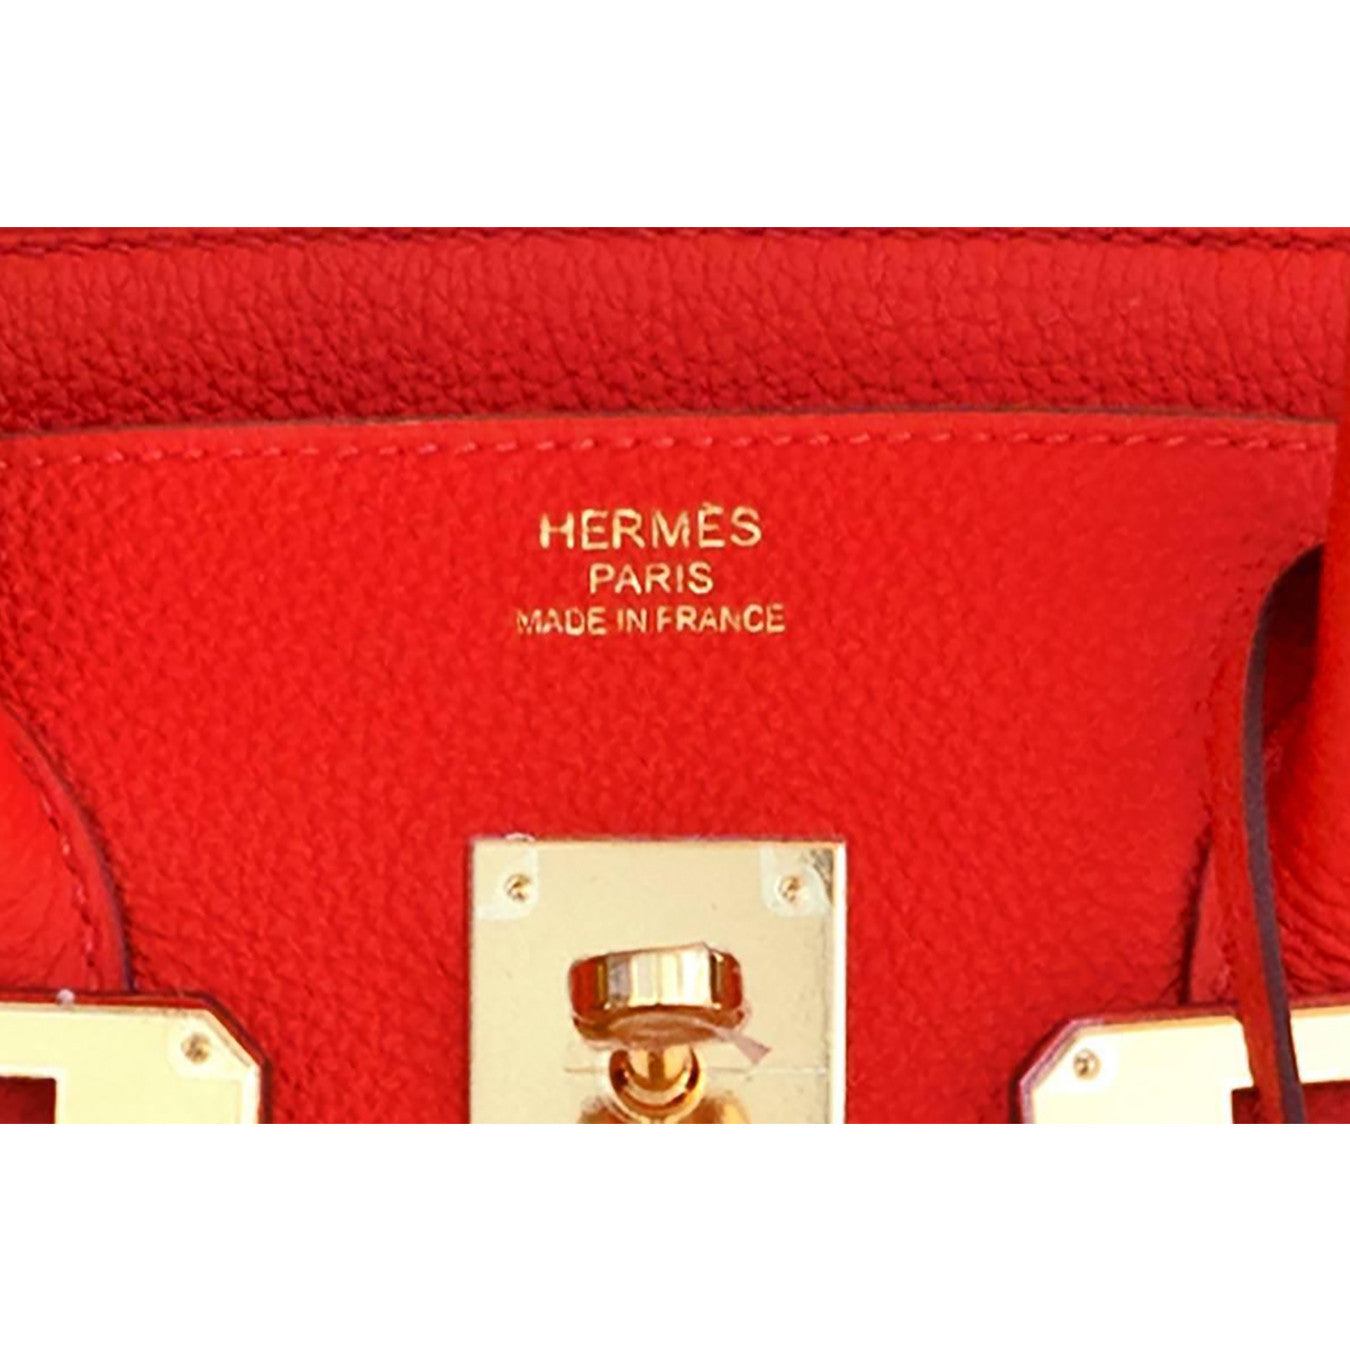 New Color! Hermes Birkin Bag 35cm Capucine With Gold Hardware at